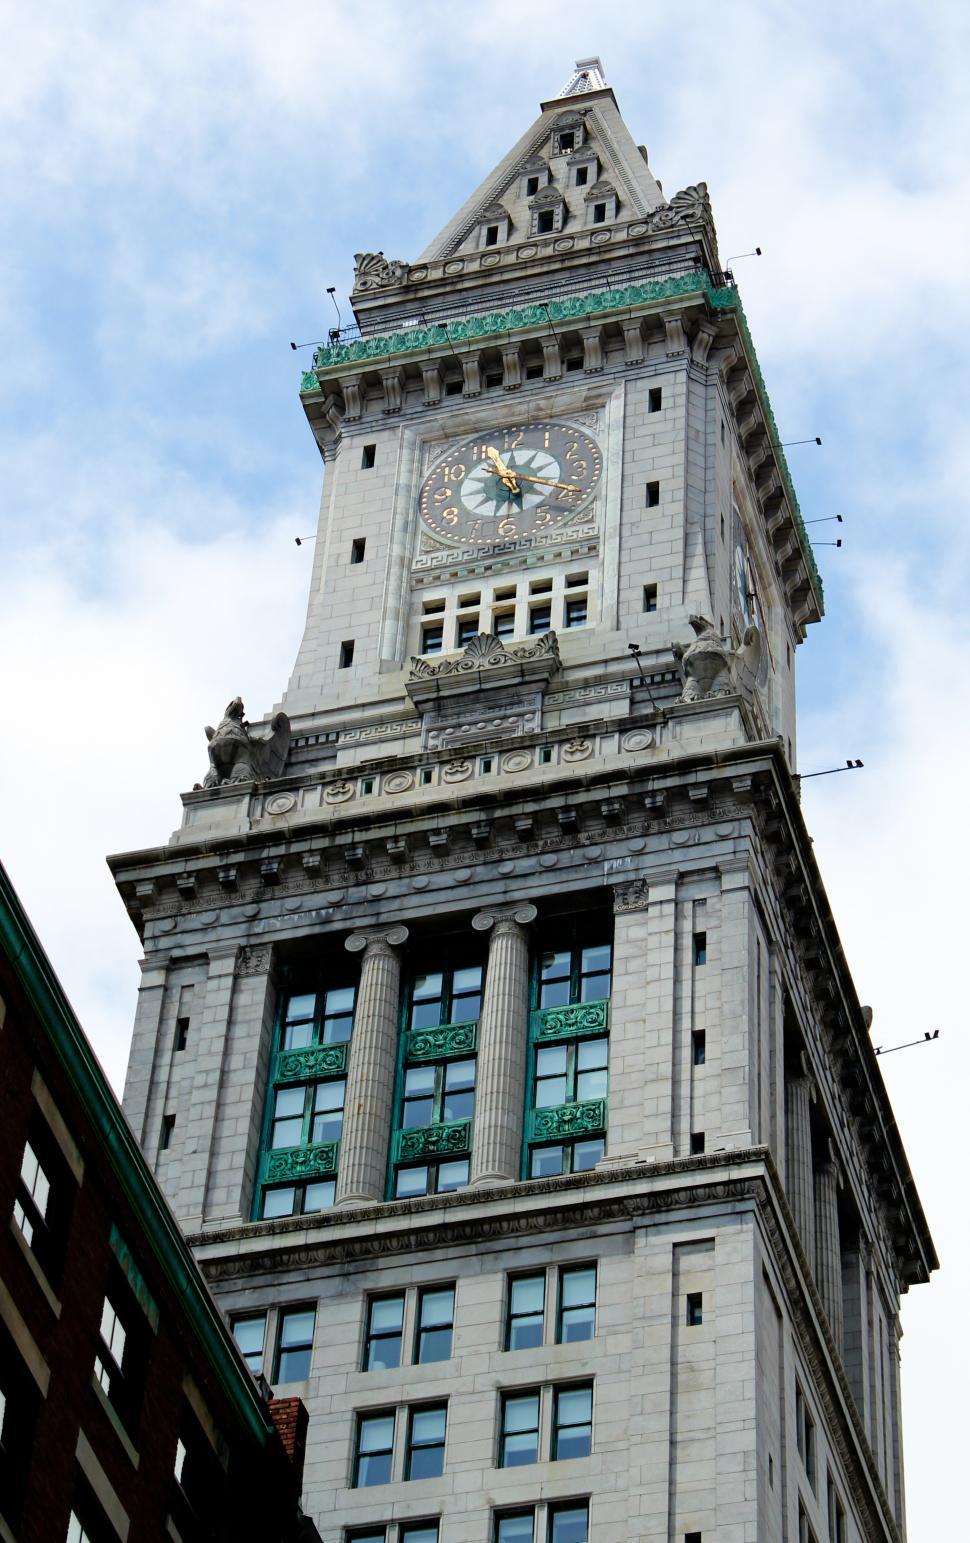 Free Image of Ornate Clock Tower Free Stock Photo 